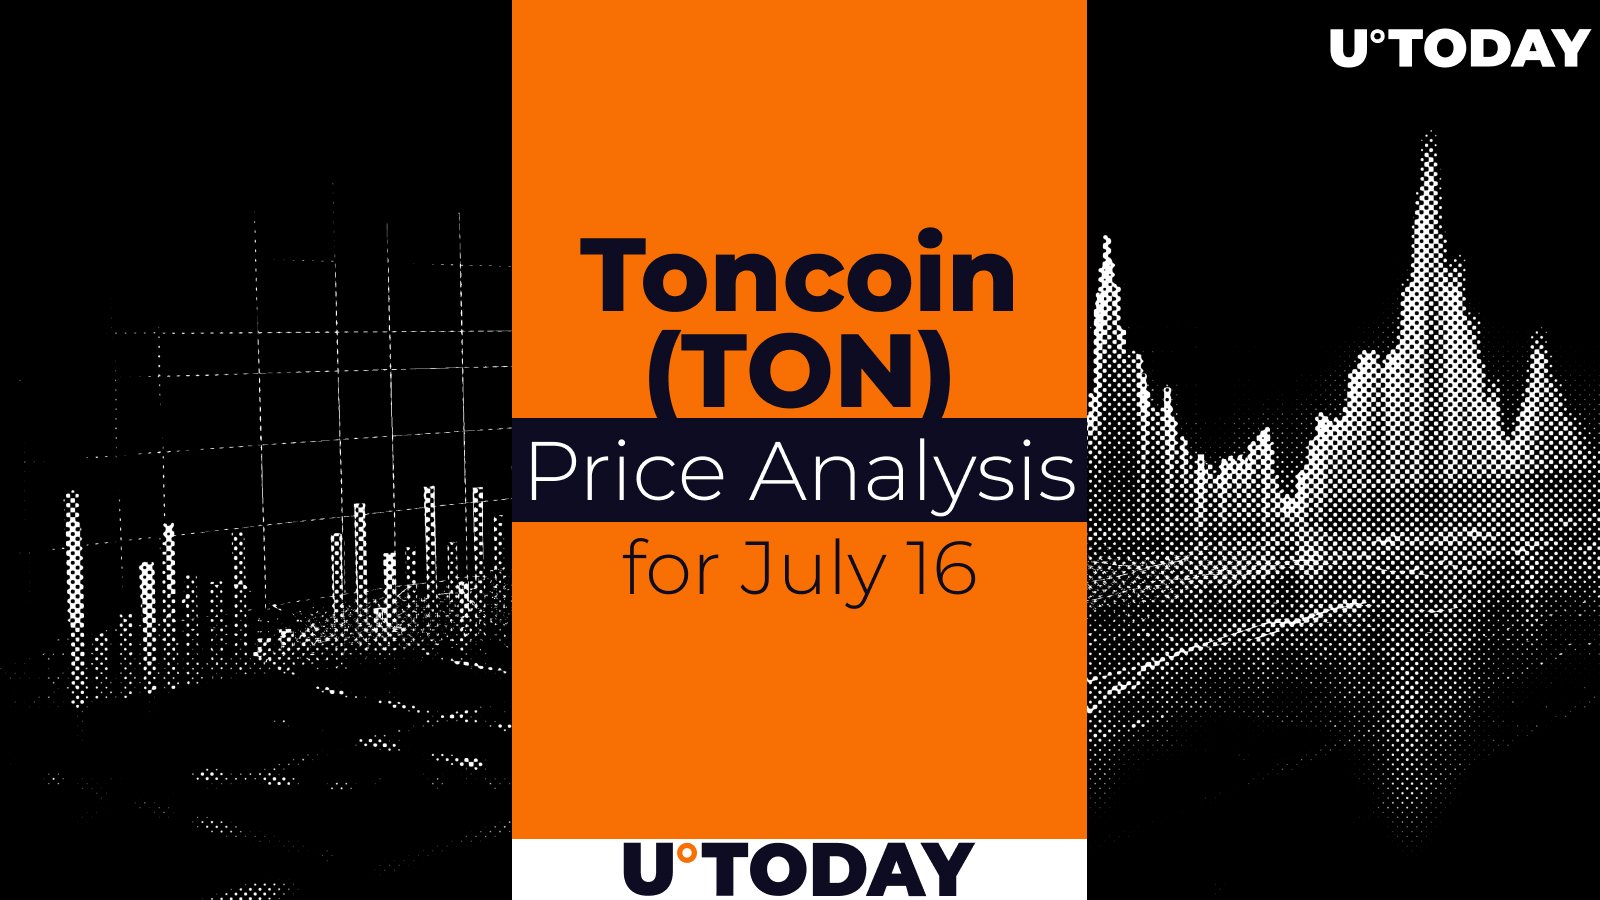 Toncoin (TON) Price Prediction for July 16